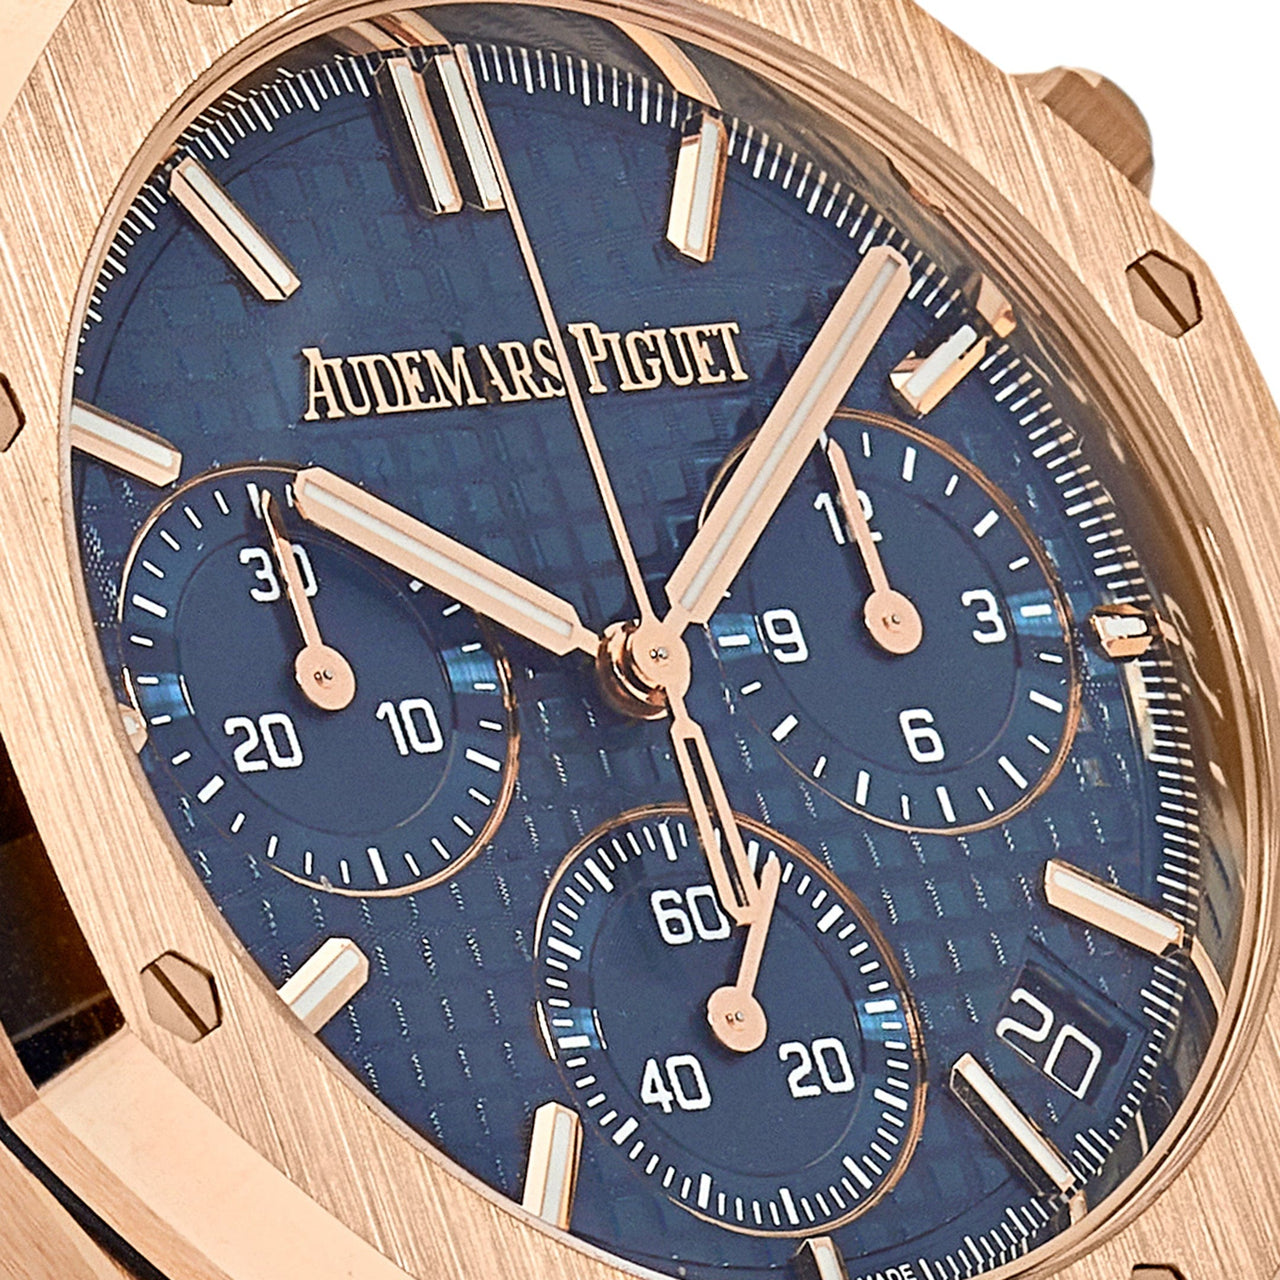 Luxury Watch Audemars Piguet Royal Oak Chronograph "50th Anniversary" Rose Gold Blue Dial 26240OR.OO.D315CR.01 Wrist Aficionado